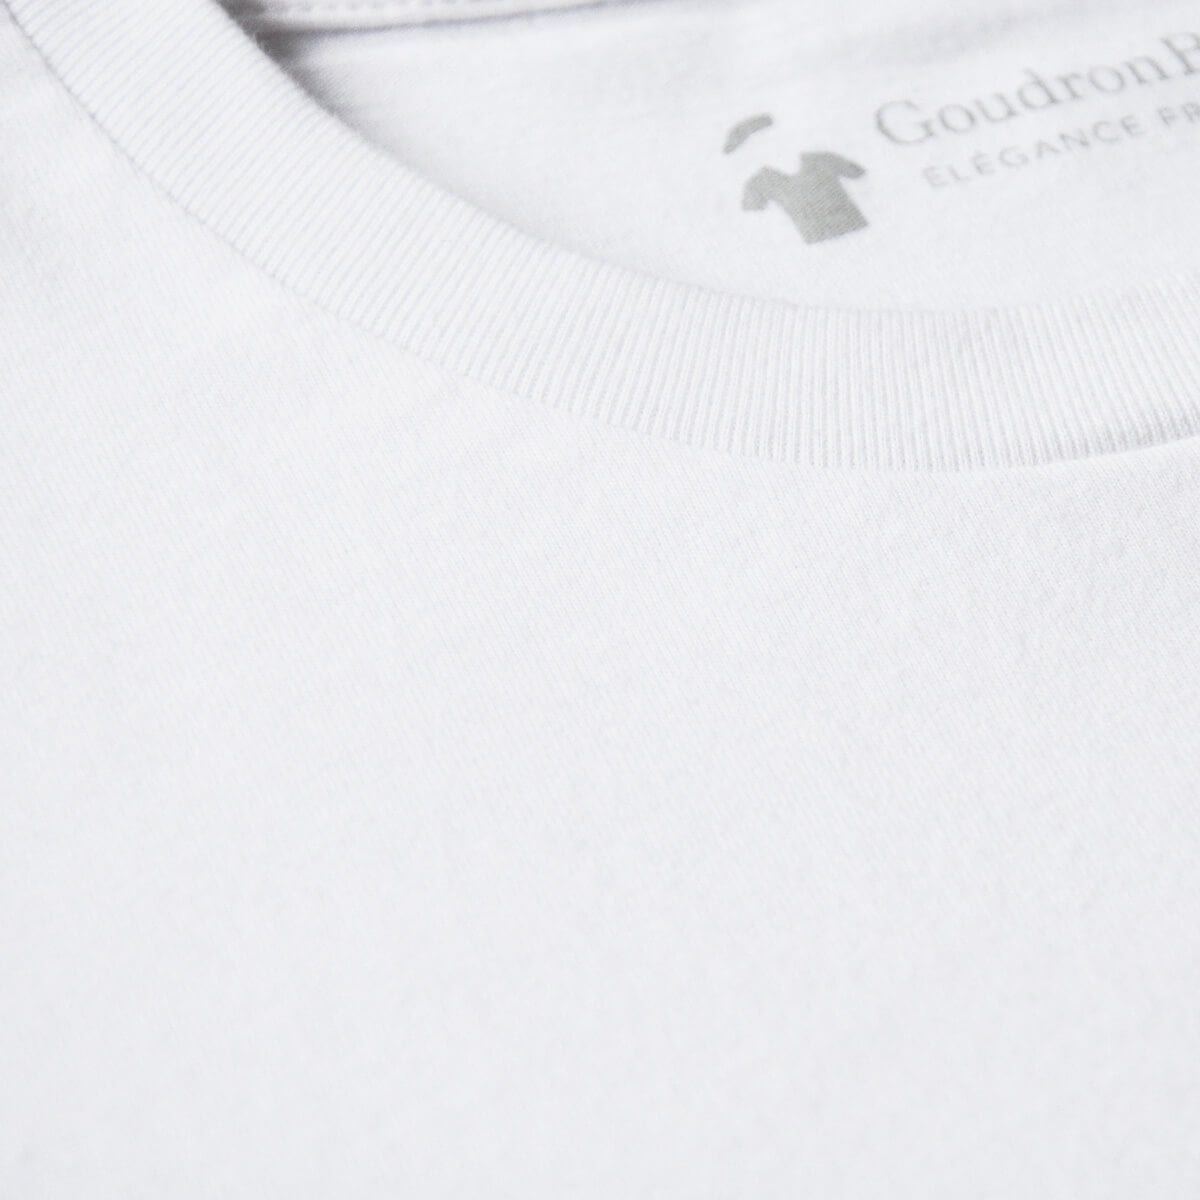 Grammage du tissu blanc en 220g/m2 du T-shirt GoudronBlanc